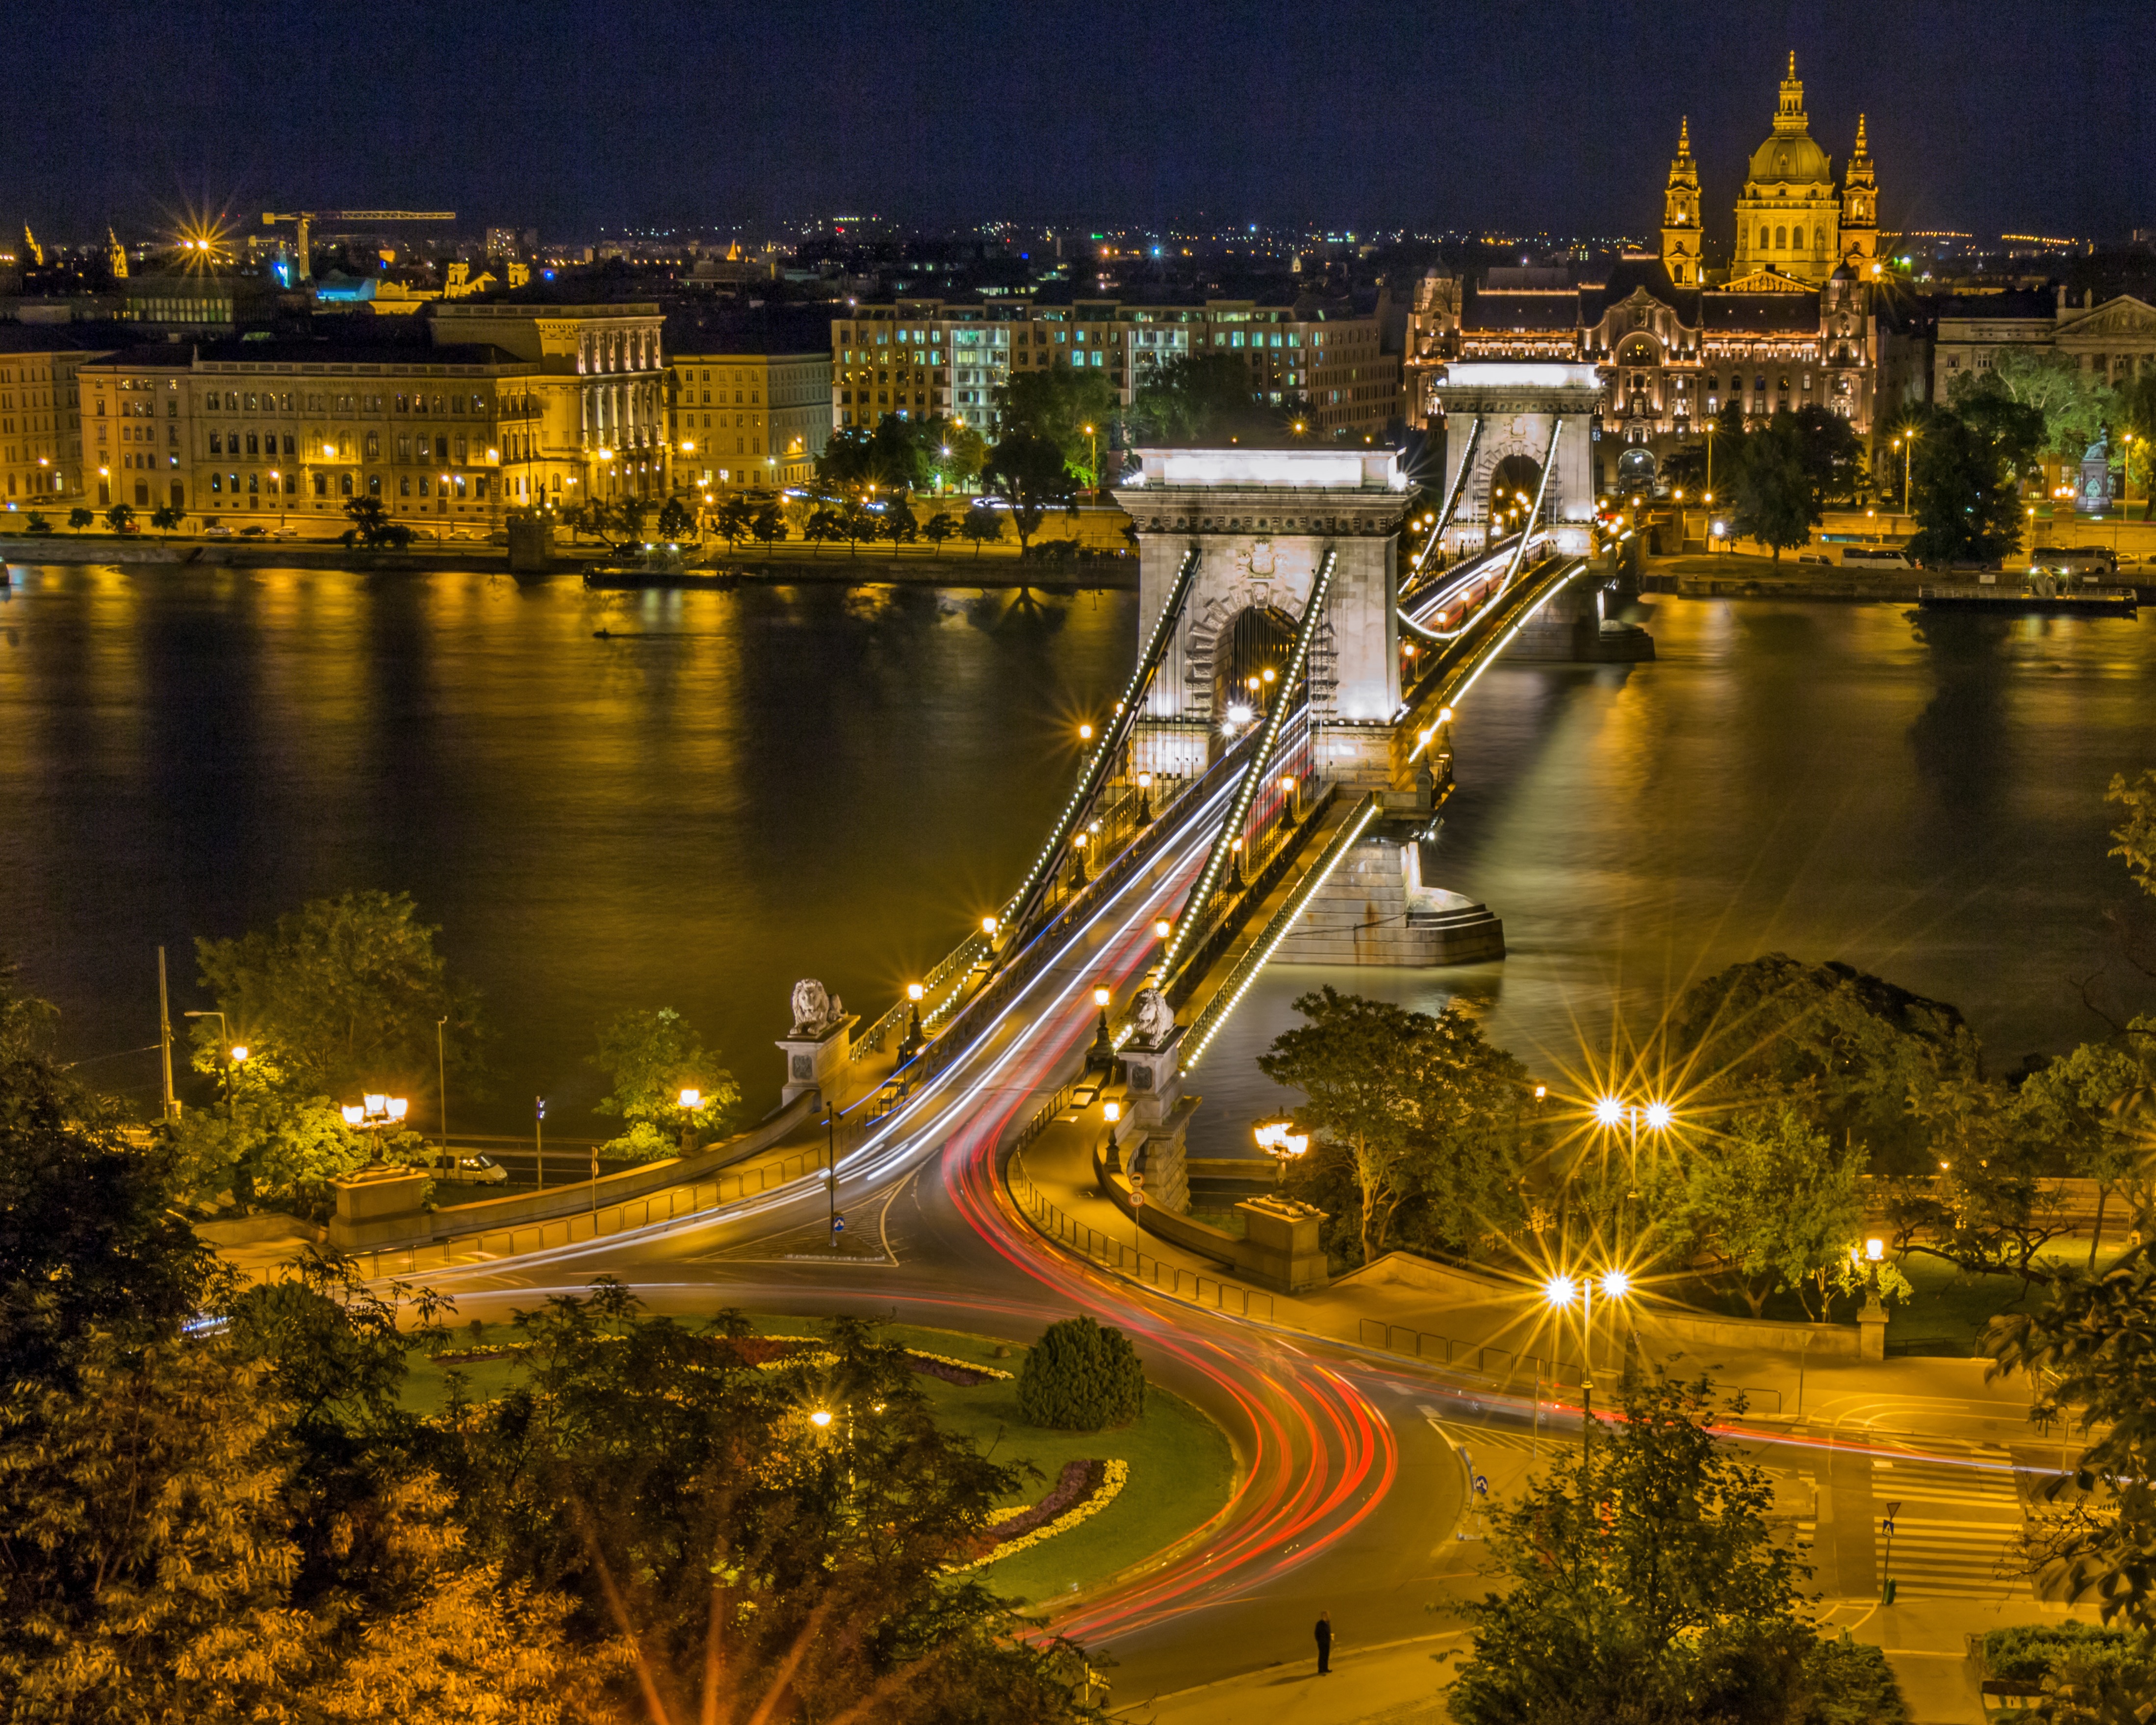 Night bridge over the river in Budapest